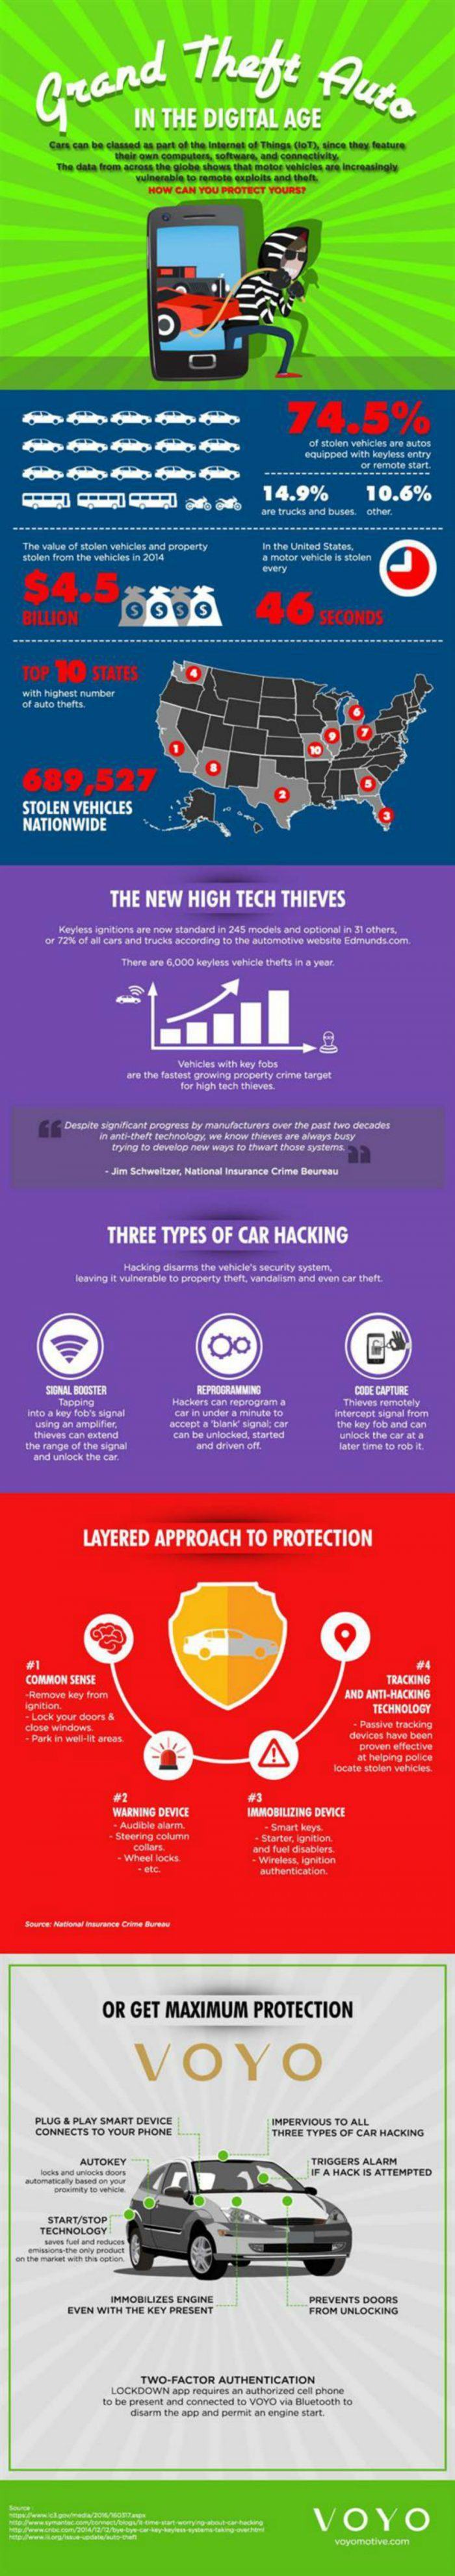 Voyo Car Hacking Graphic